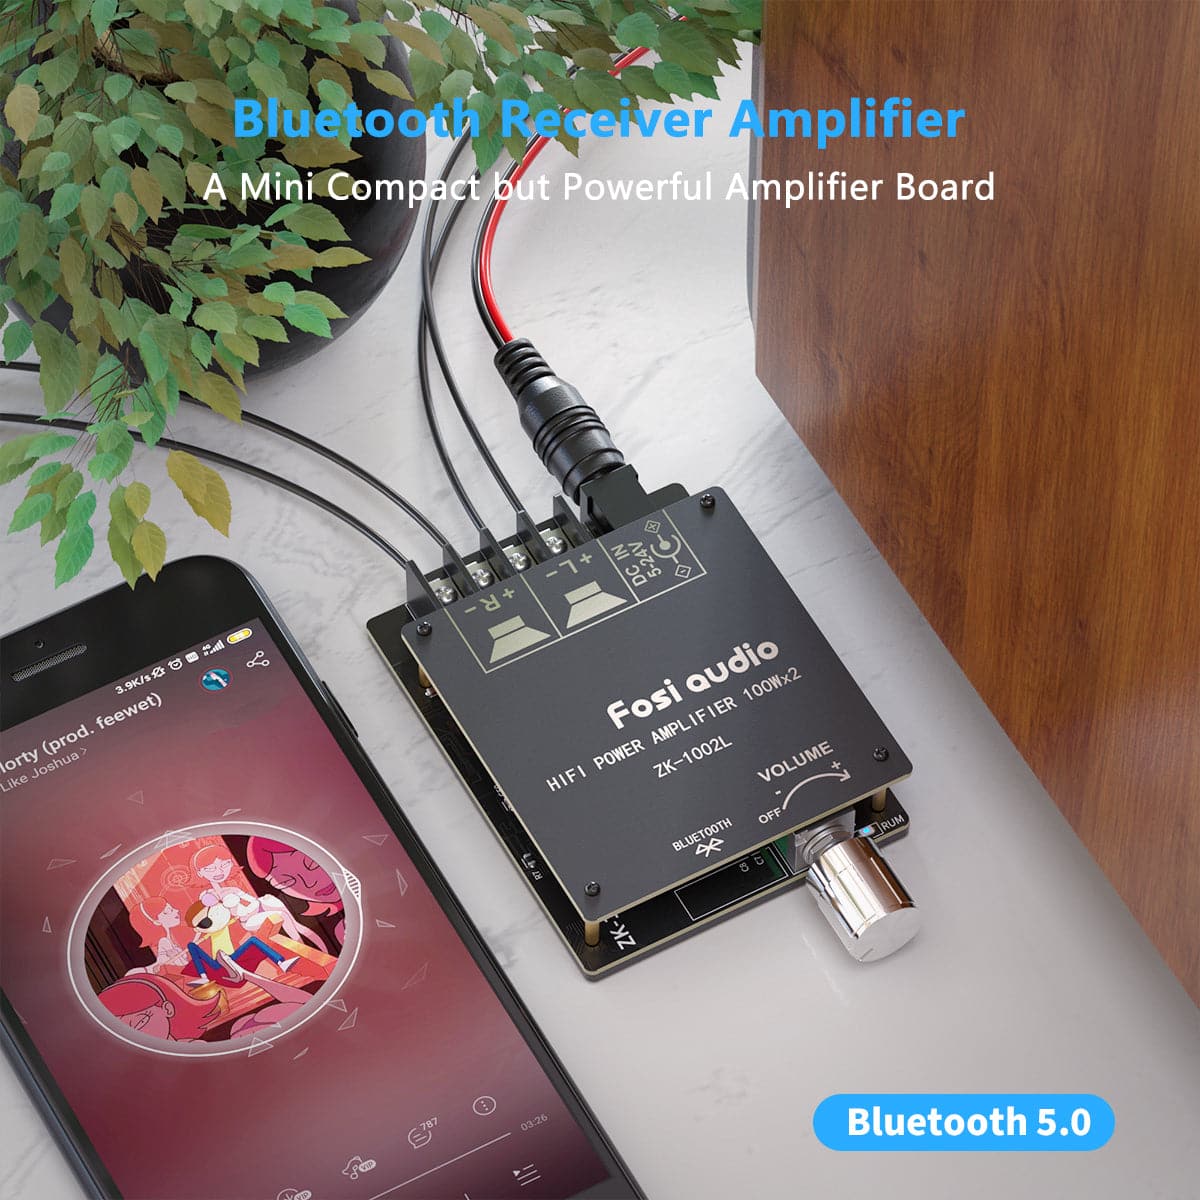 Bluetooth 5.0 Stereo Audio Receiver Amplifier Board 2 Channel Mini Wireless High Power Digital Amp Module for Home Passive Speakers 100W x 2 Fosi Audio ZK-1002L